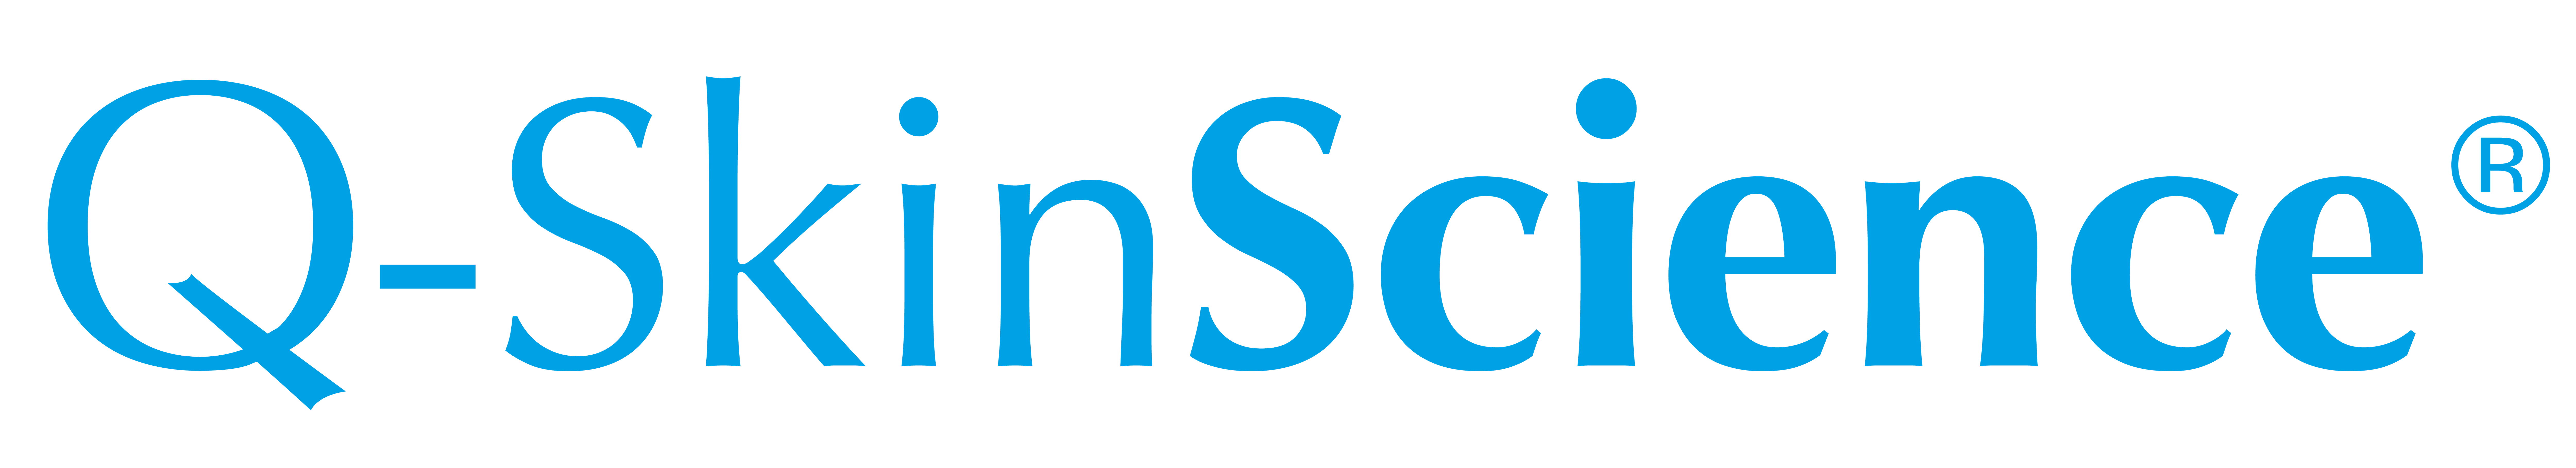 Q-SkinScience Logo